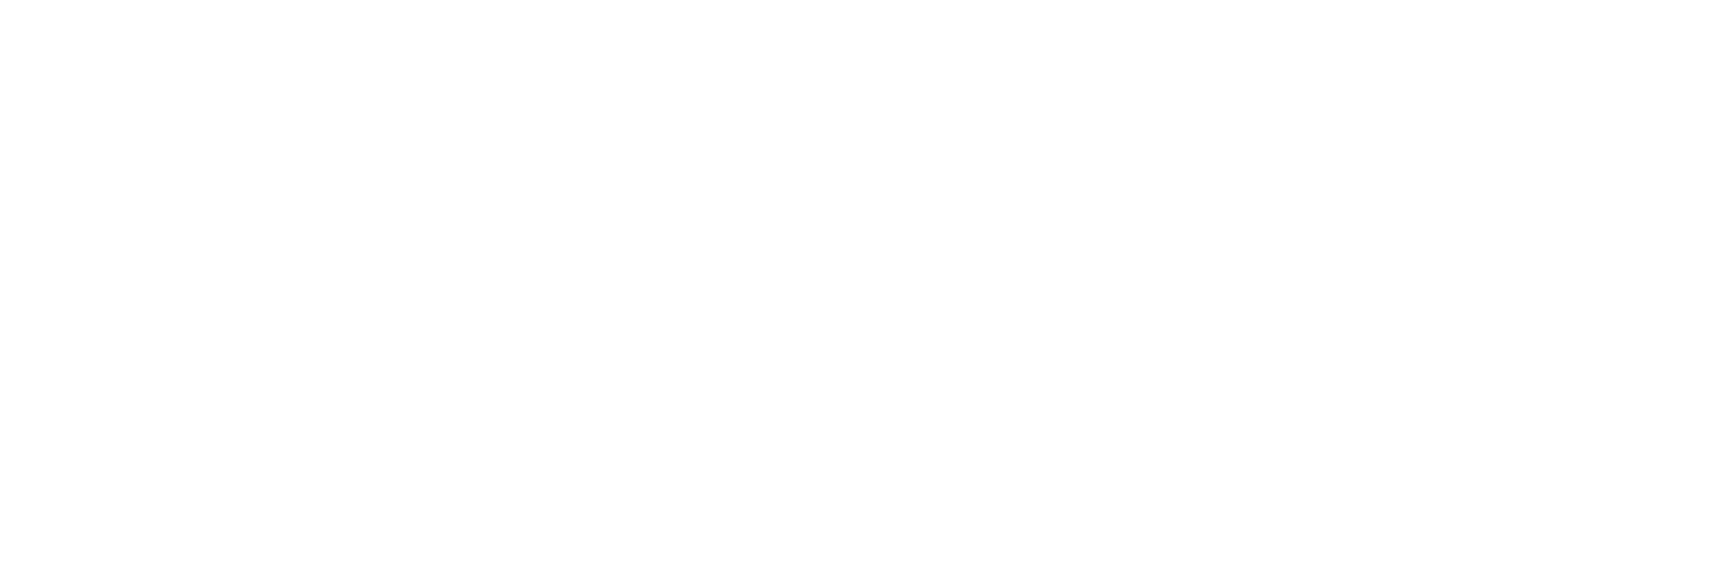 Marmalade Marketing - White@3x